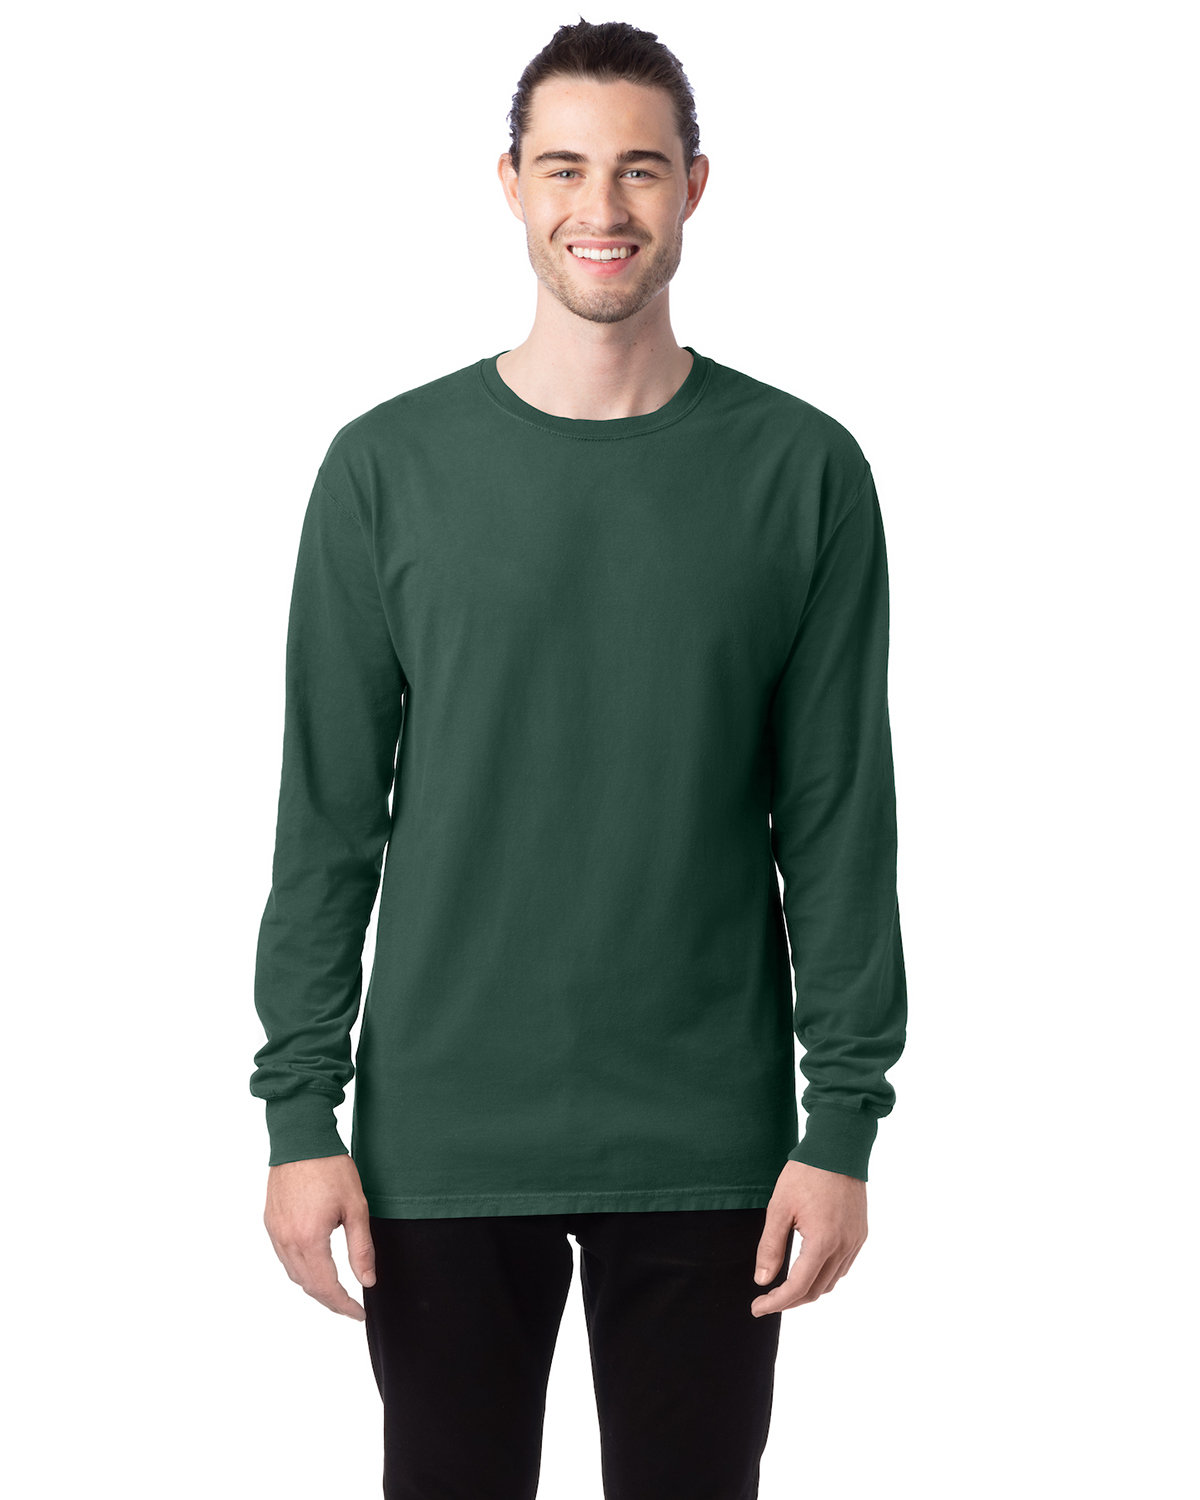 ComfortWash by Hanes Unisex Garment-Dyed Long-Sleeve T-Shirt FIELD GREEN 